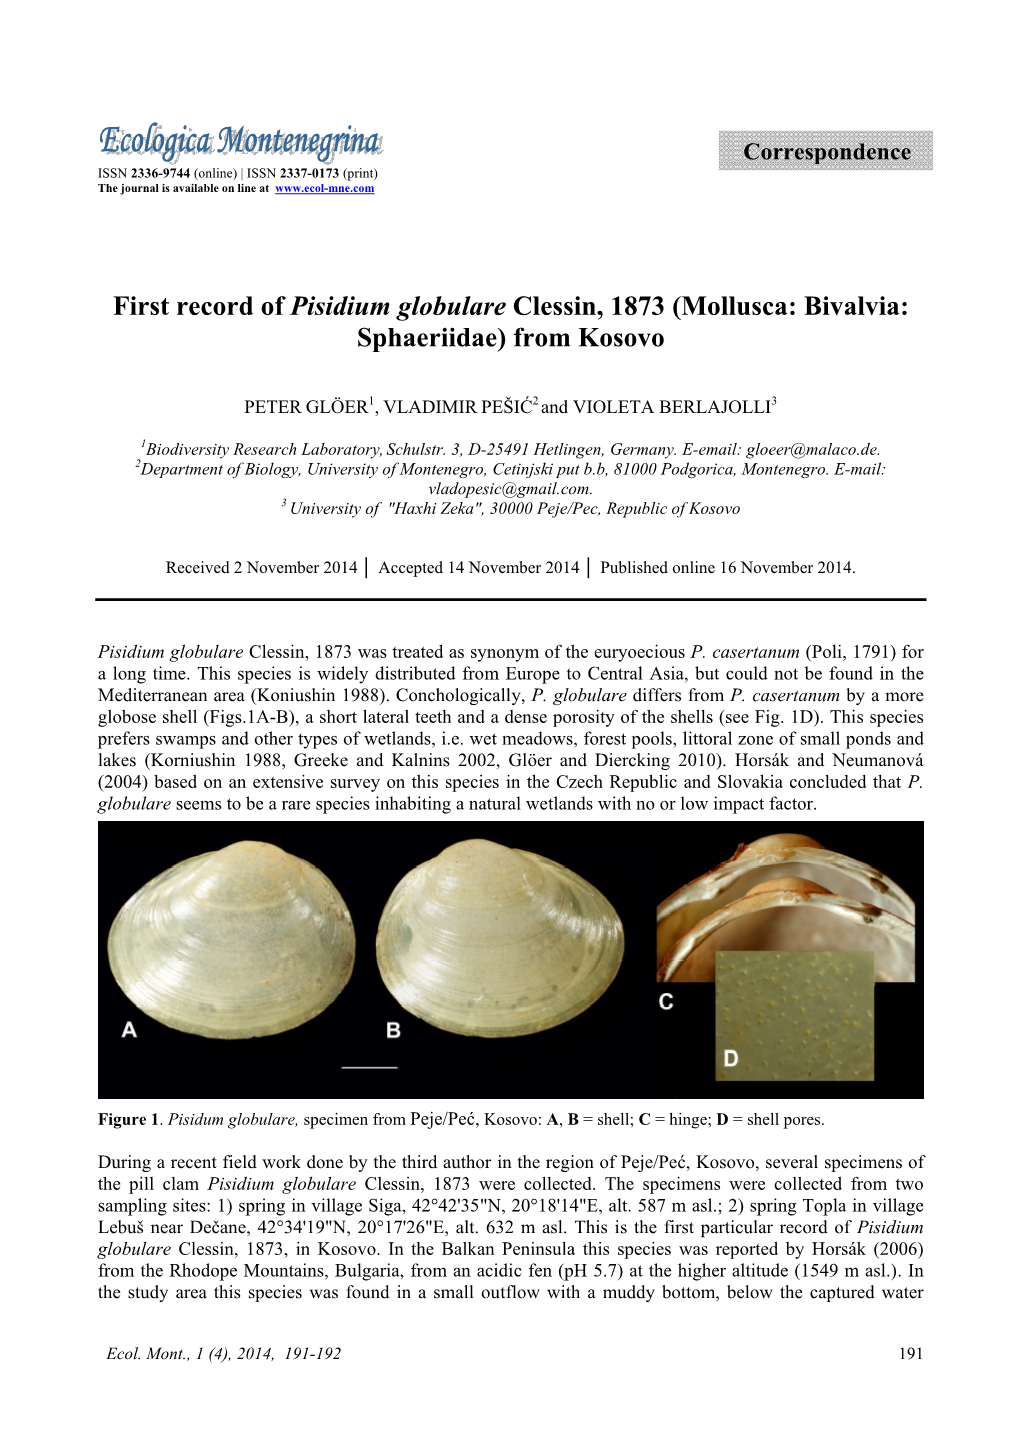 First Record of Pisidium Globulare Clessin, 1873 (Mollusca: Bivalvia: Sphaeriidae) from Kosovo